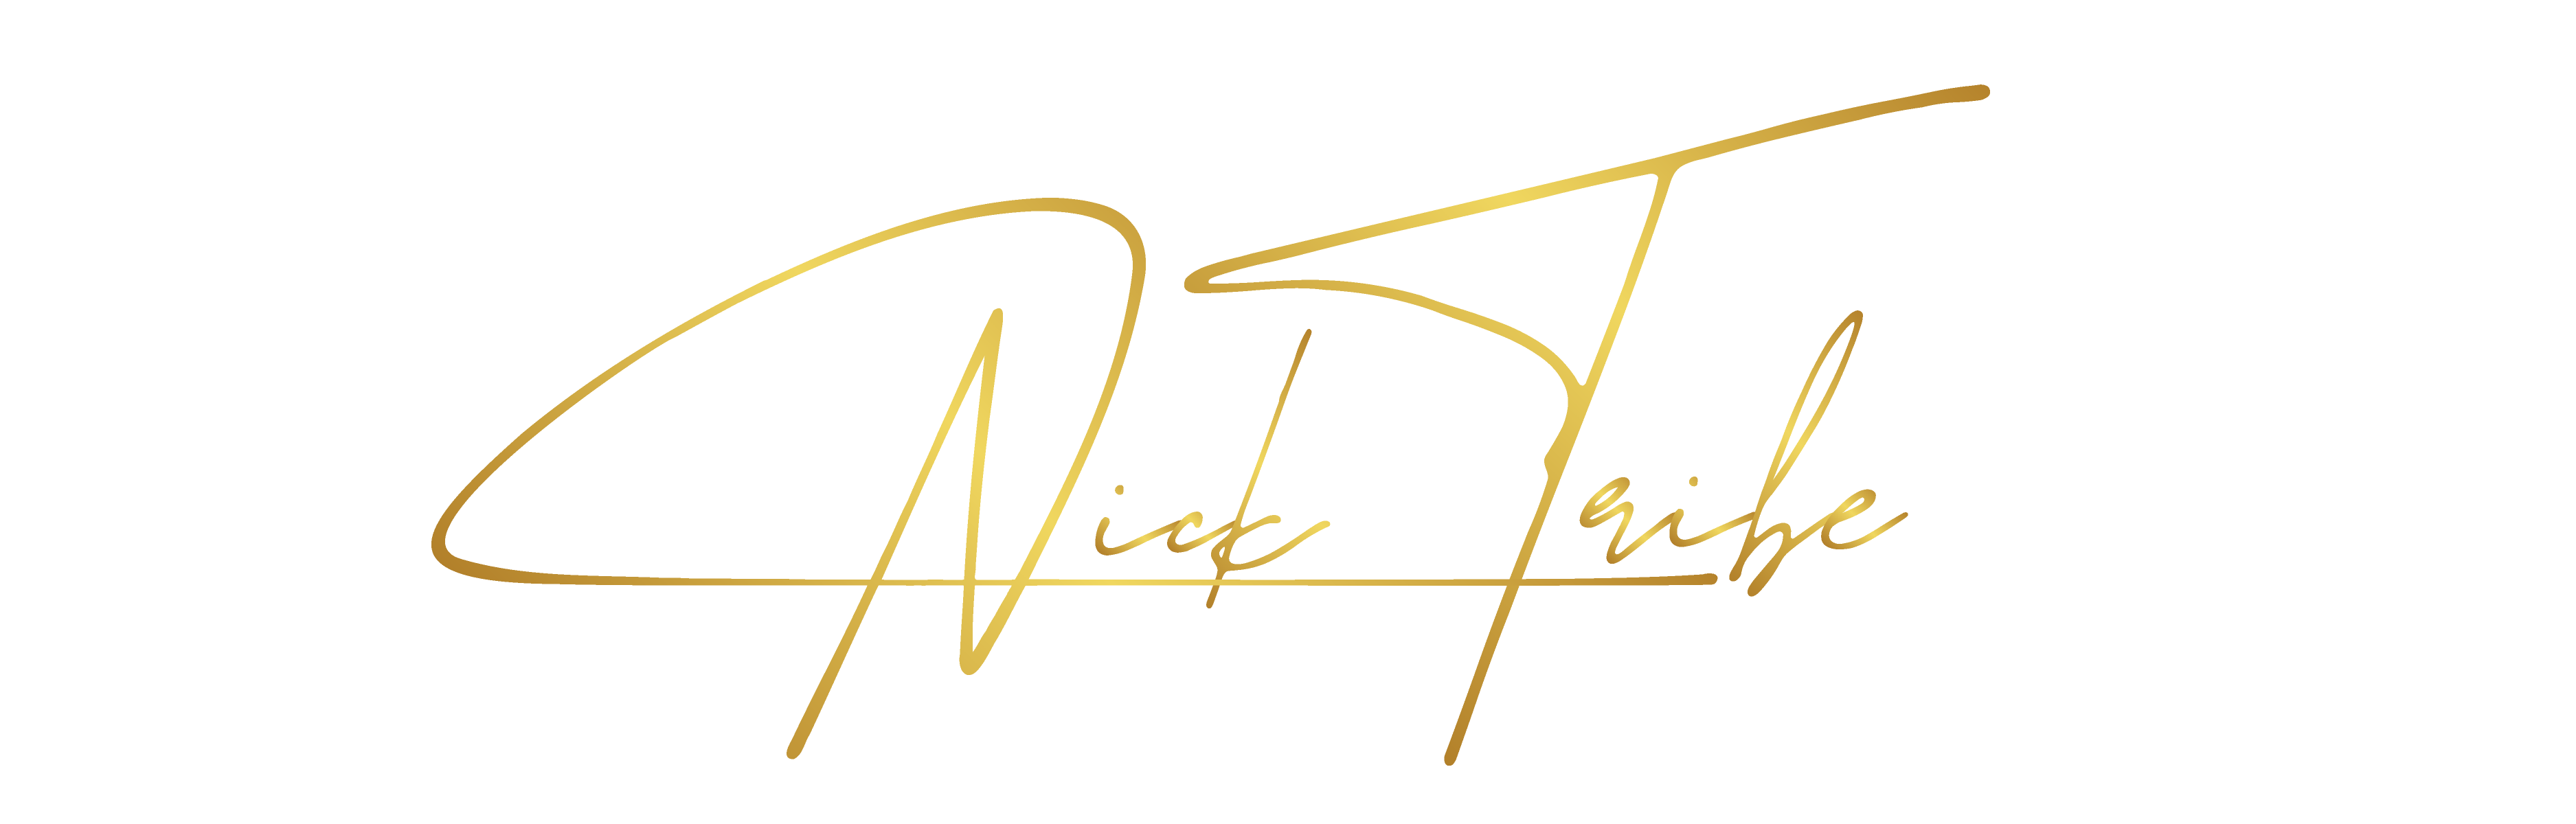 Nick Tribe signature